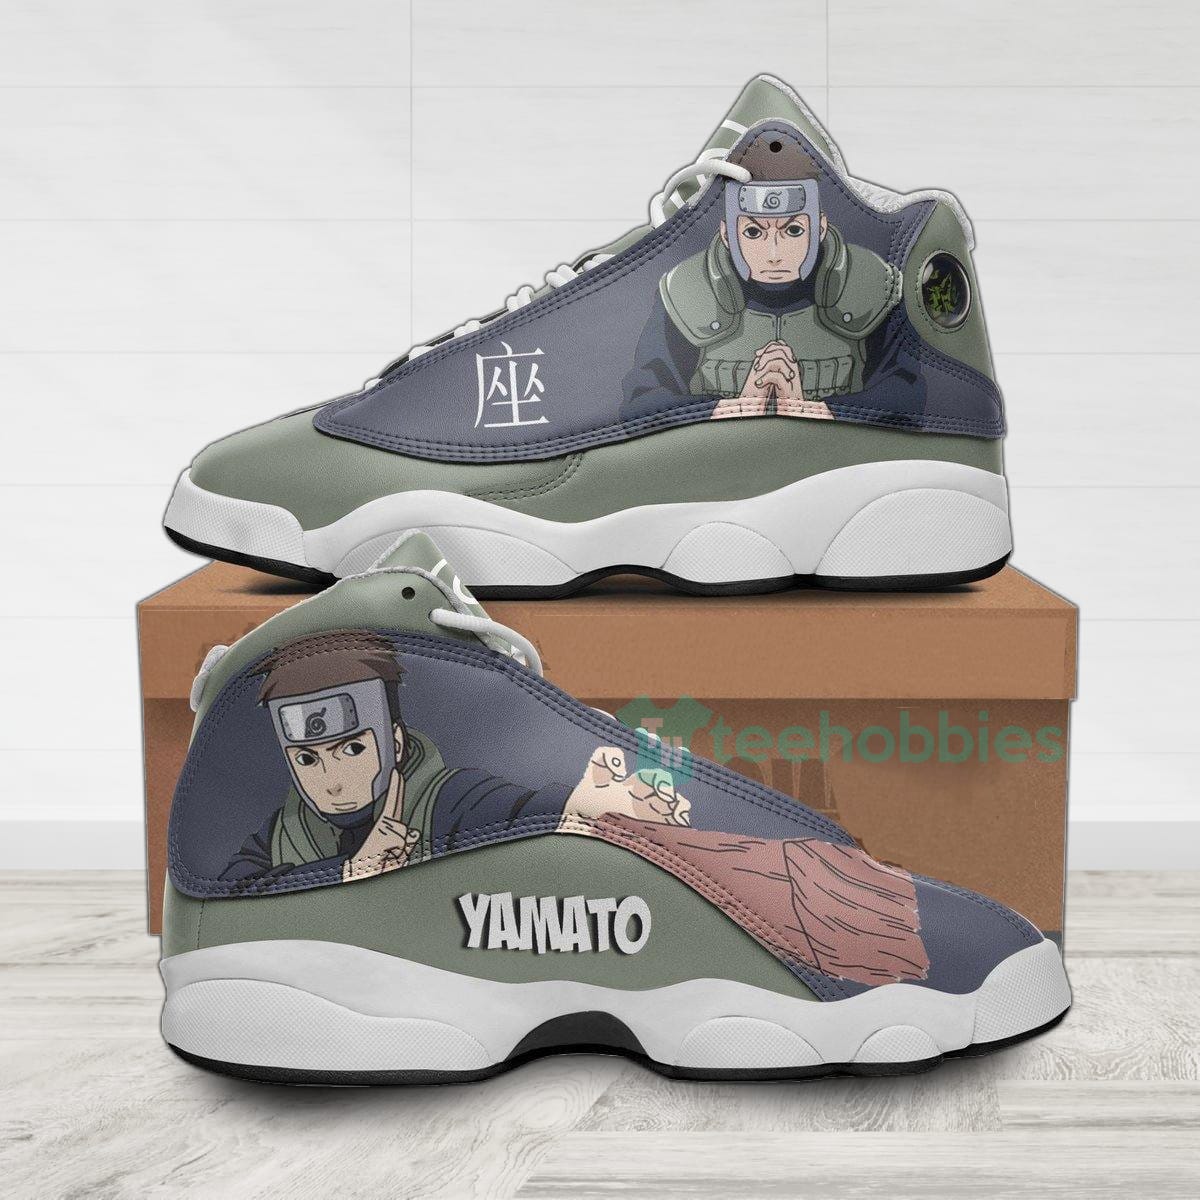 Yamato Custom Nrt Anime Air Jordan 13 Shoes Product photo 1